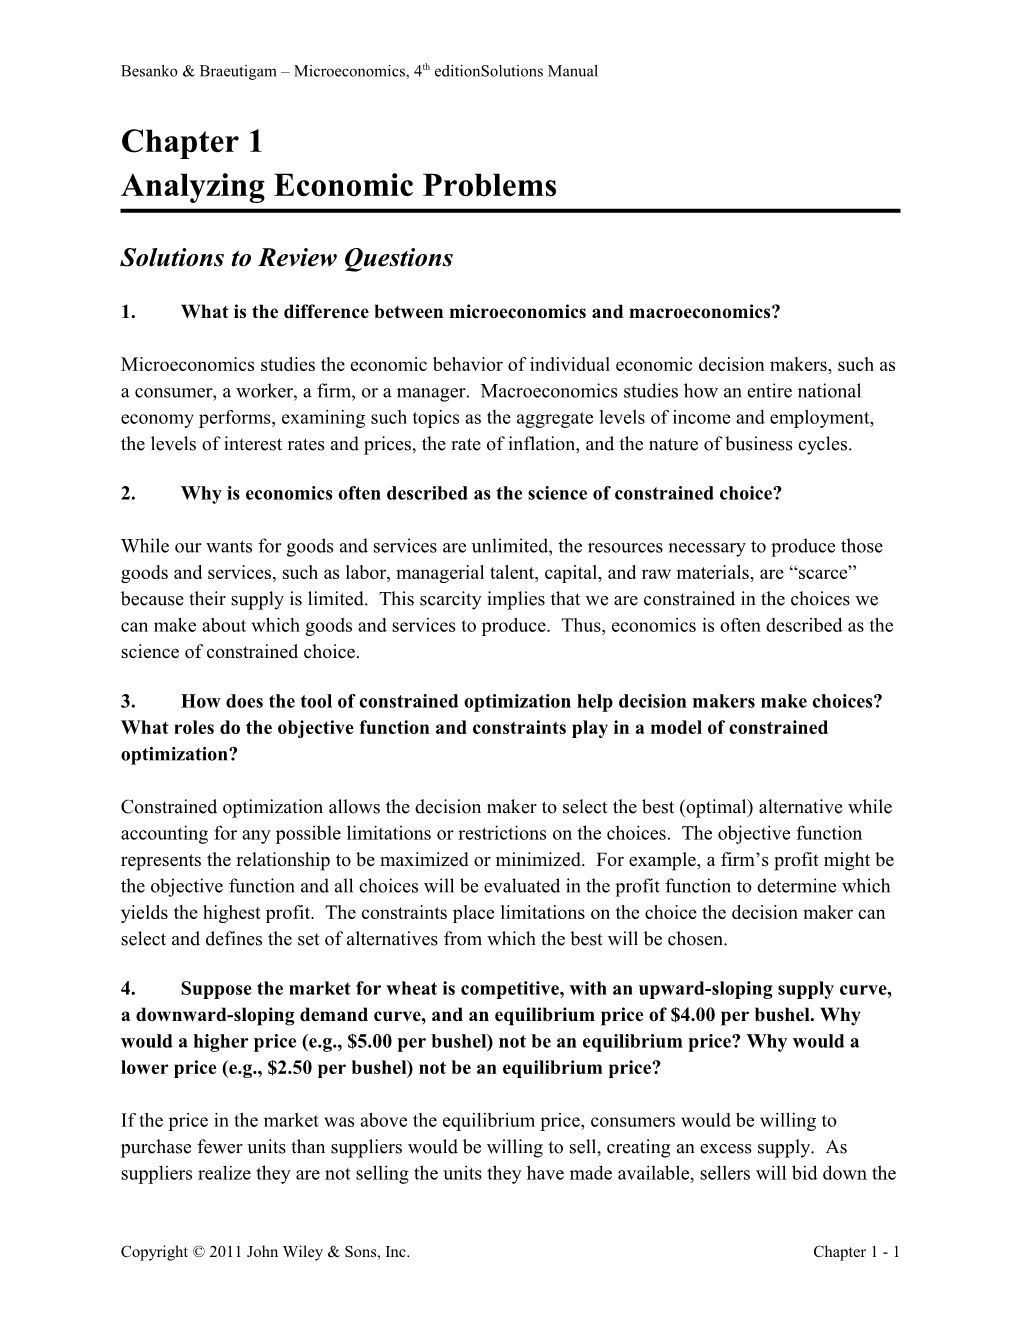 Besanko & Braeutigam Microeconomics, 4Theditionsolutions Manual